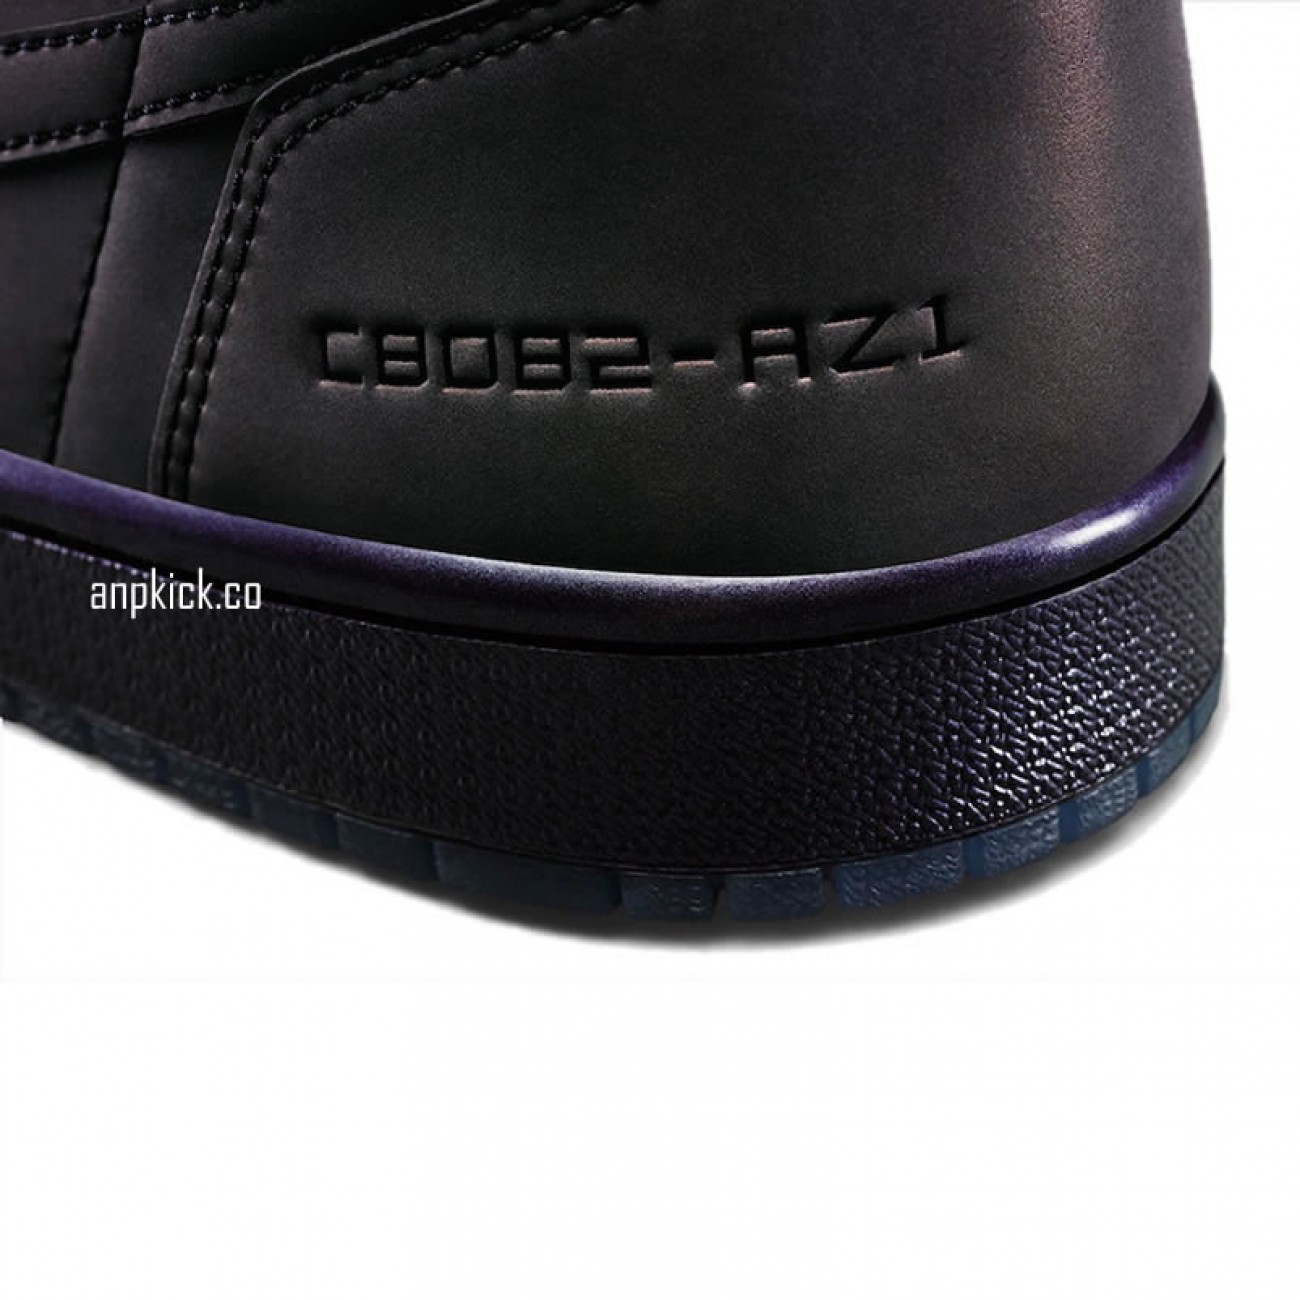 Air Jordan 1 High Zoom "Fearless" Black Lucky Release Date BV0006-900